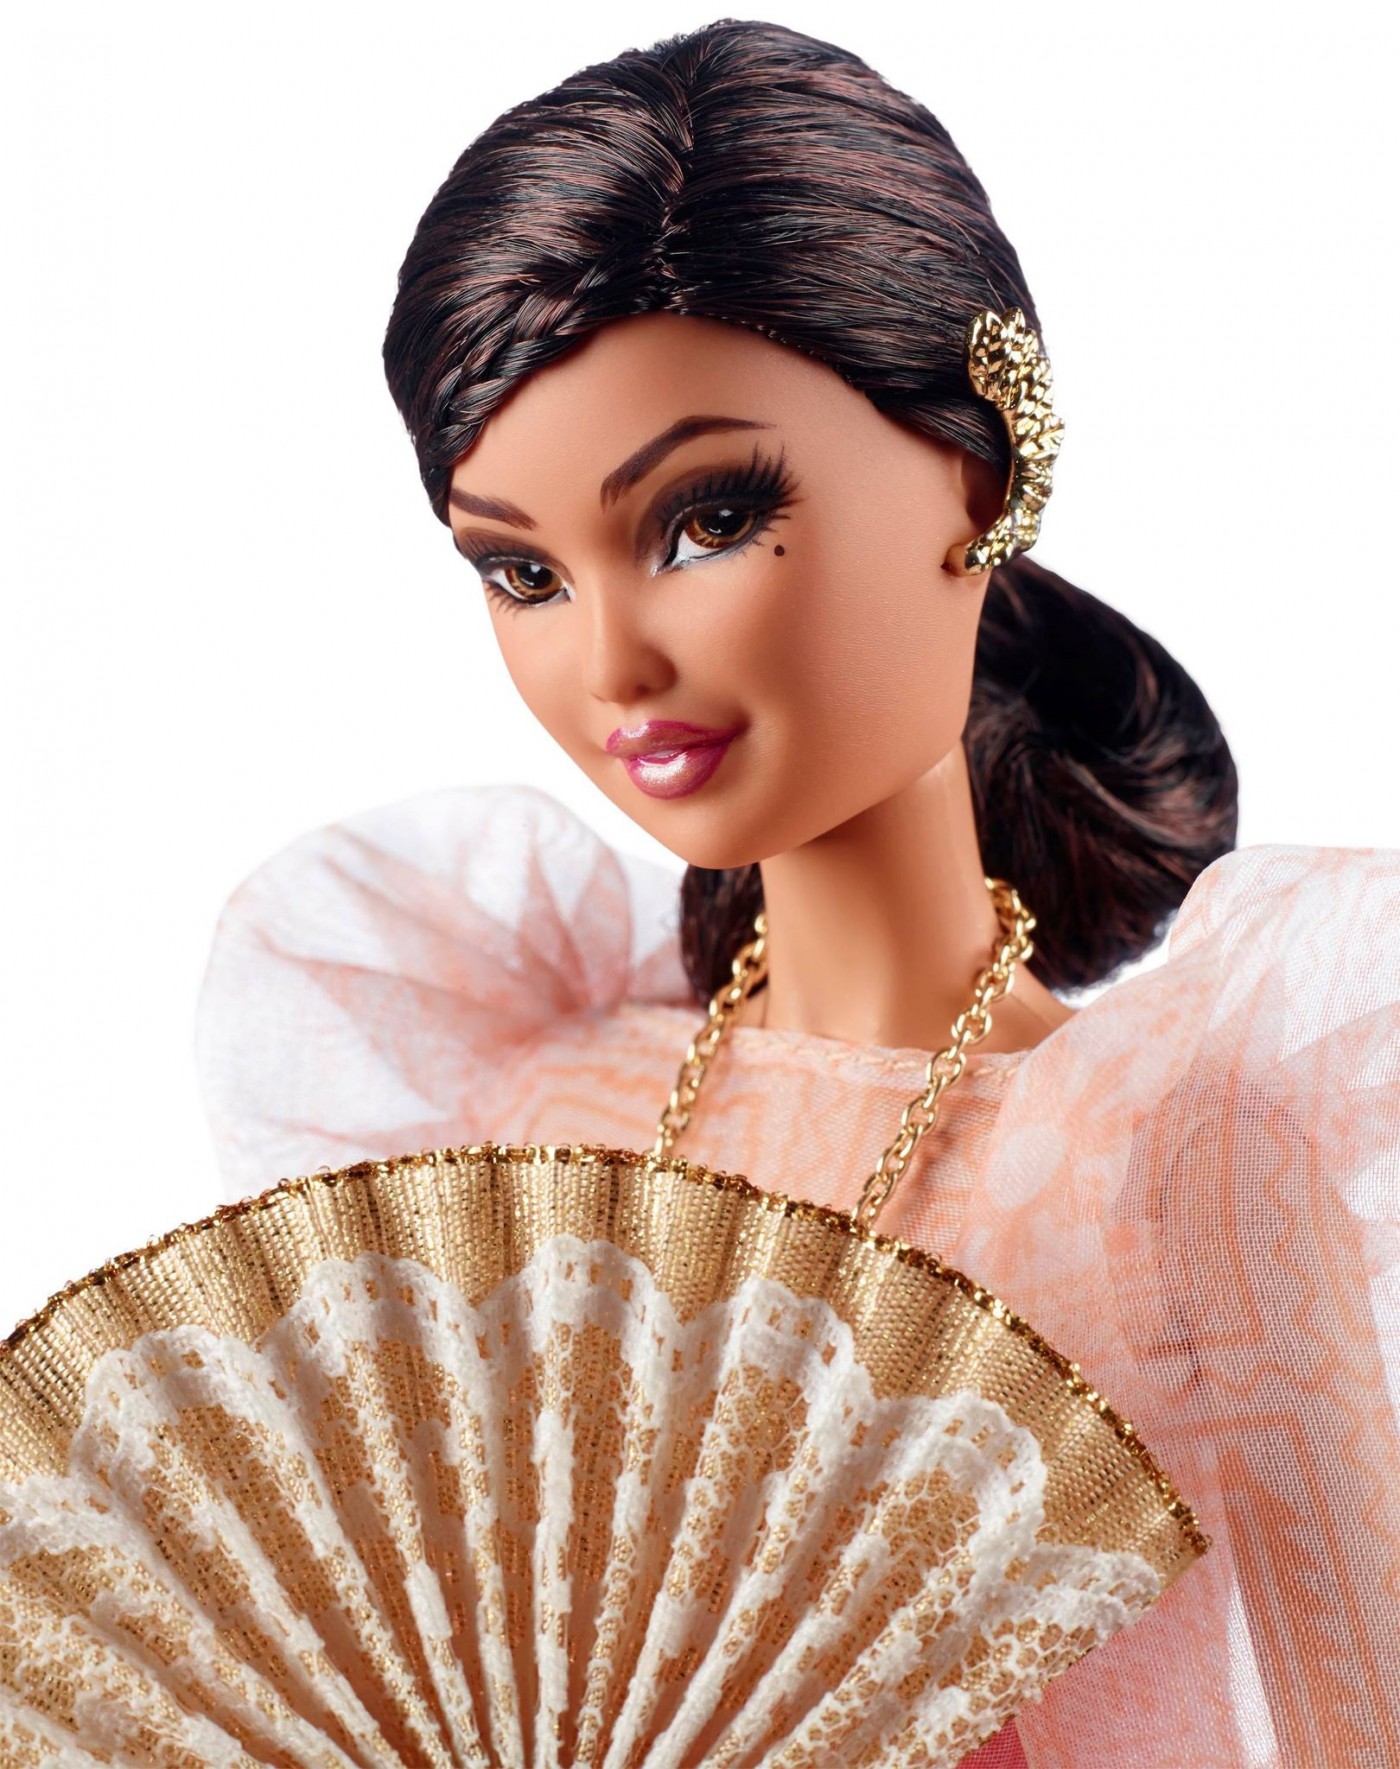 ‘Mutya Barbie, courtesy of Carlyle Nuera, Mattel’